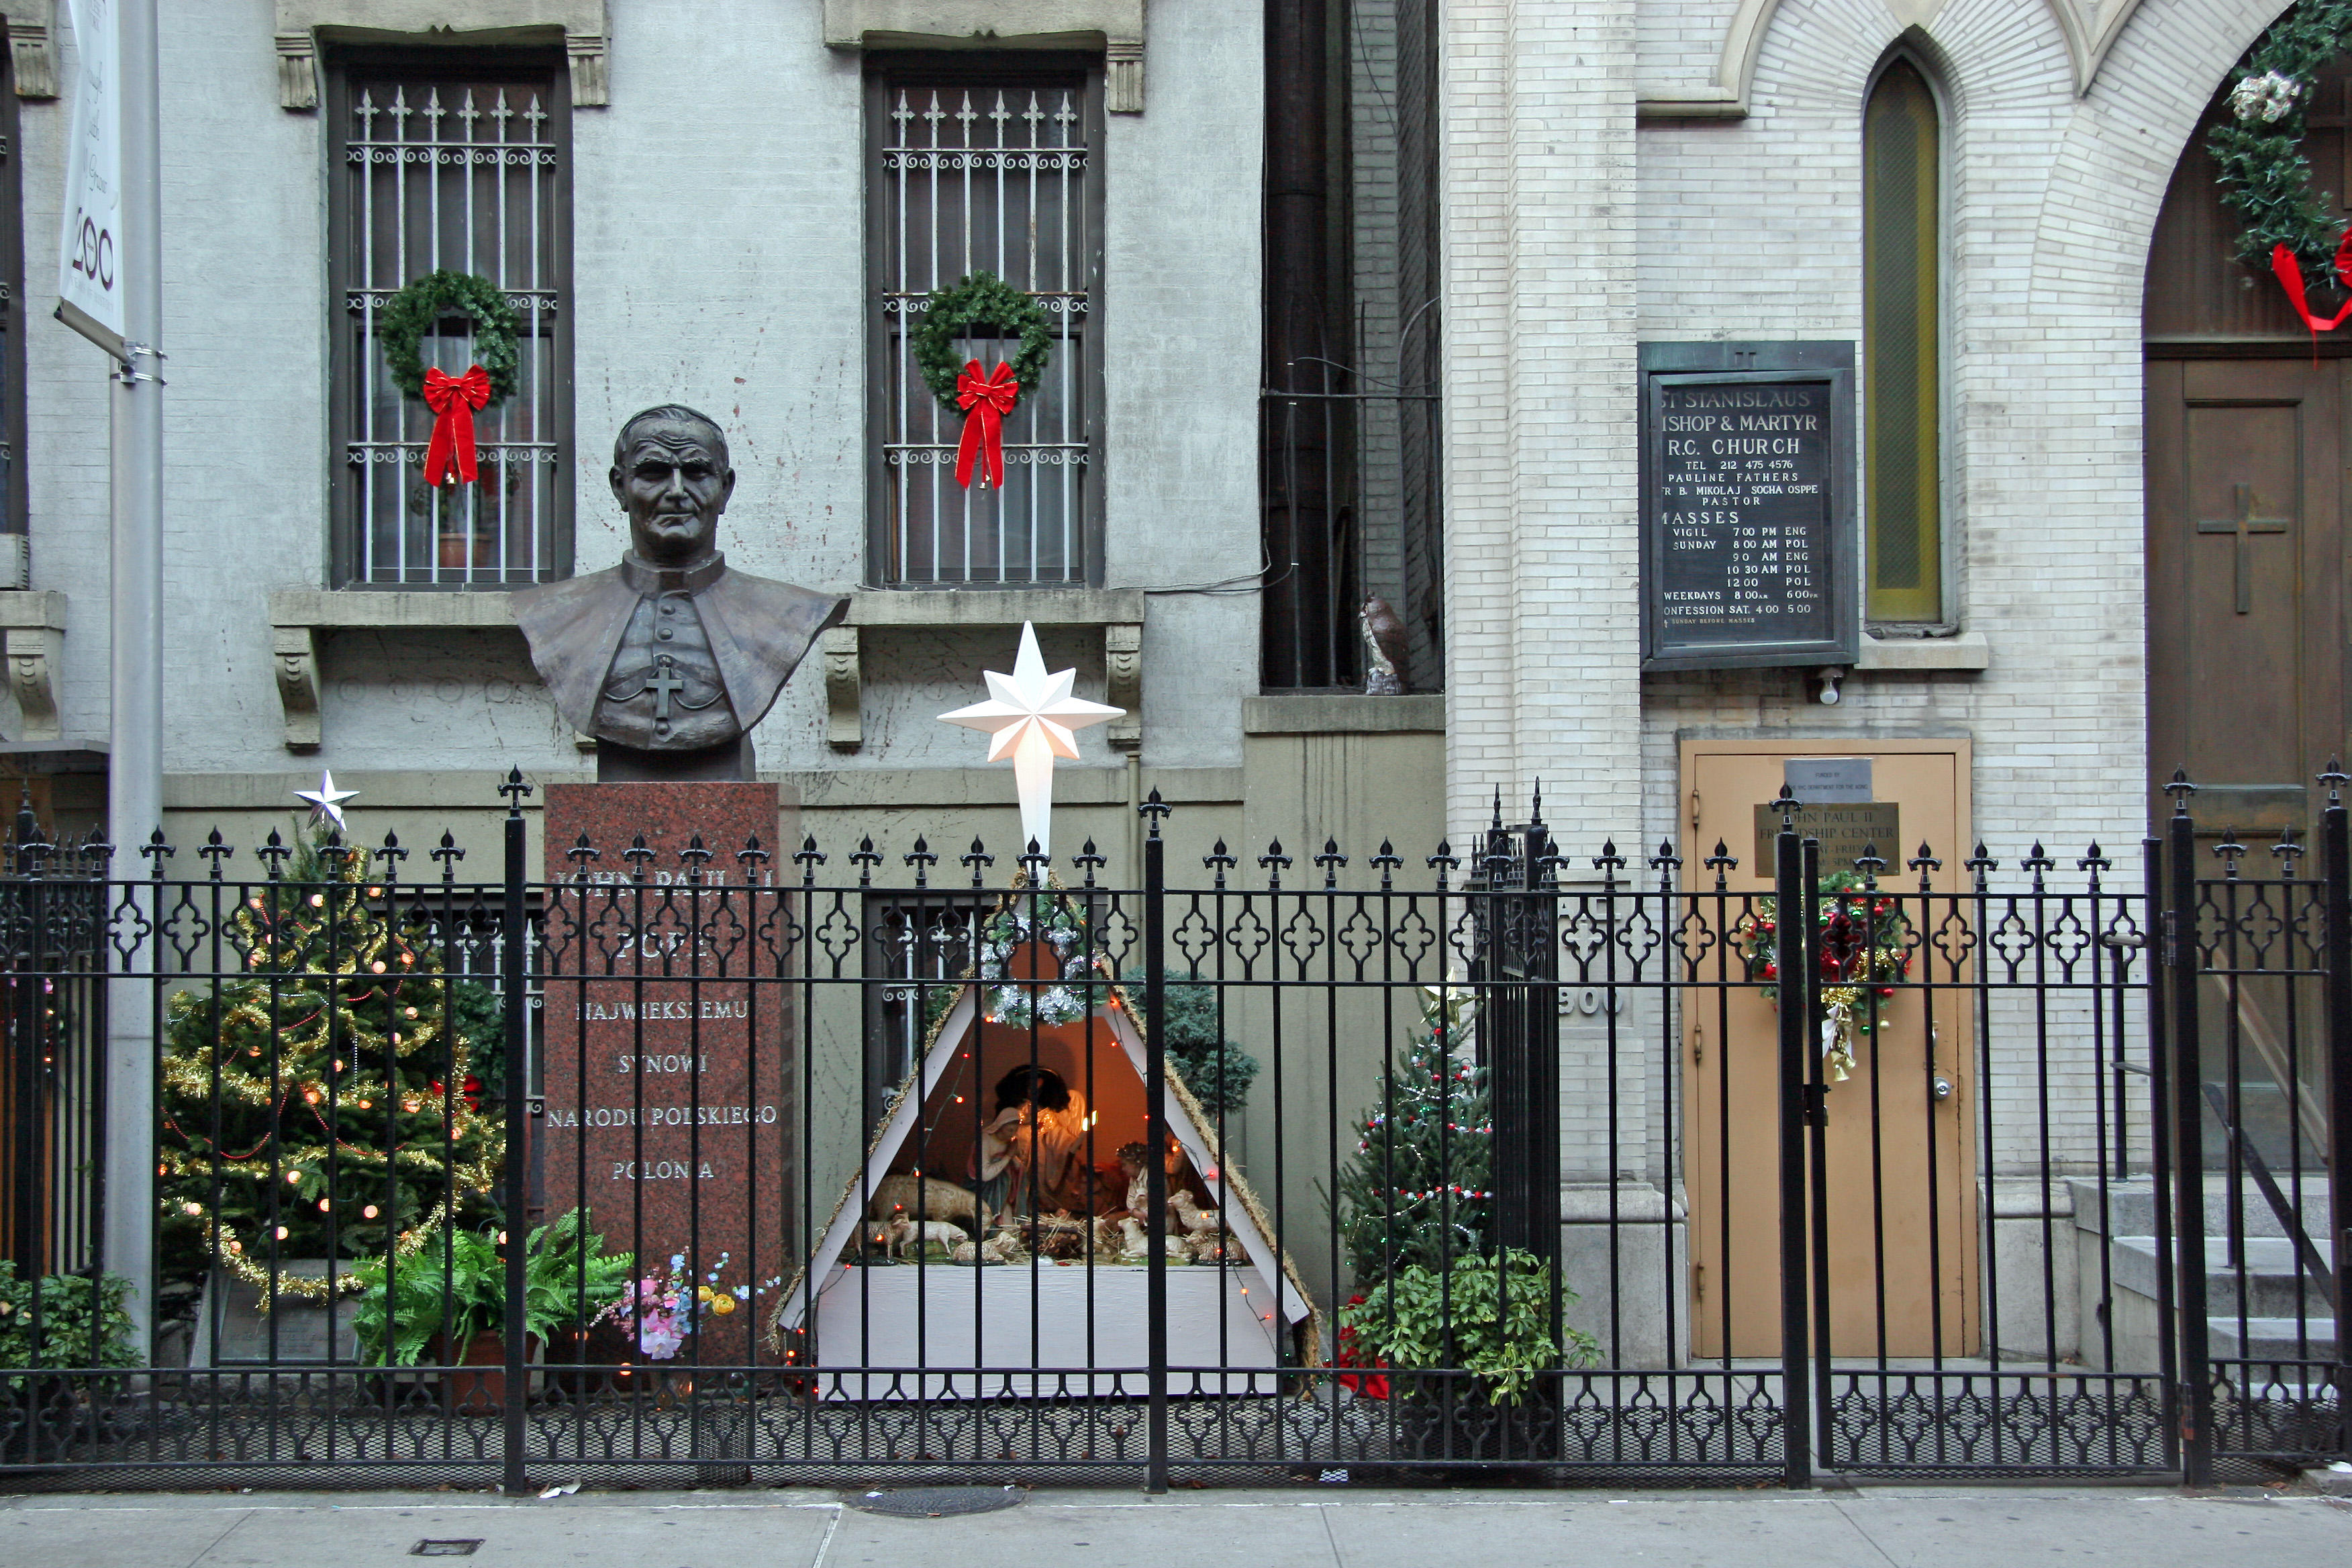 Saint Stanislaus Church with Creach & Statue of Pope John Paul II